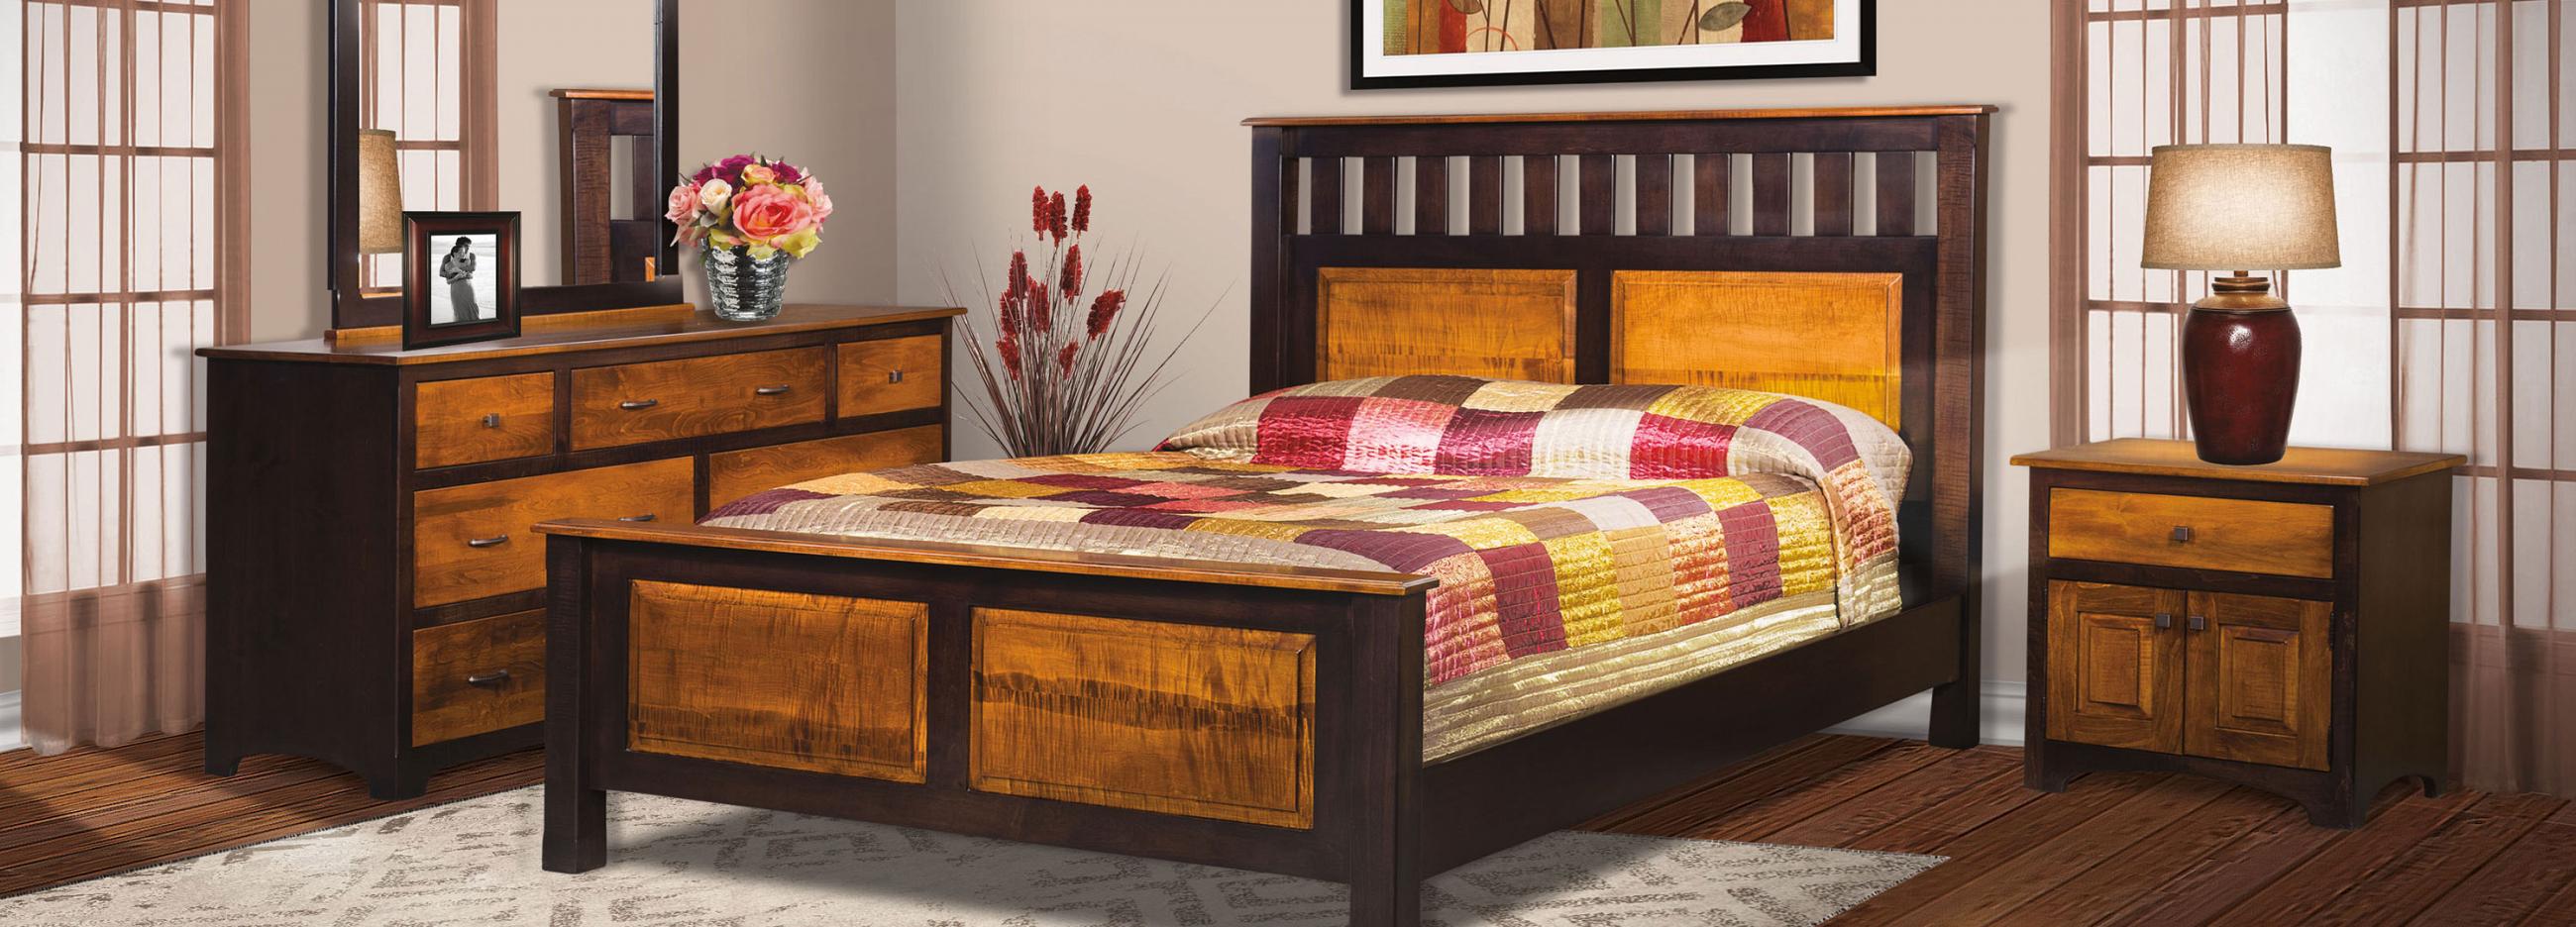 E&S Wood Creations Bedroom Furniture